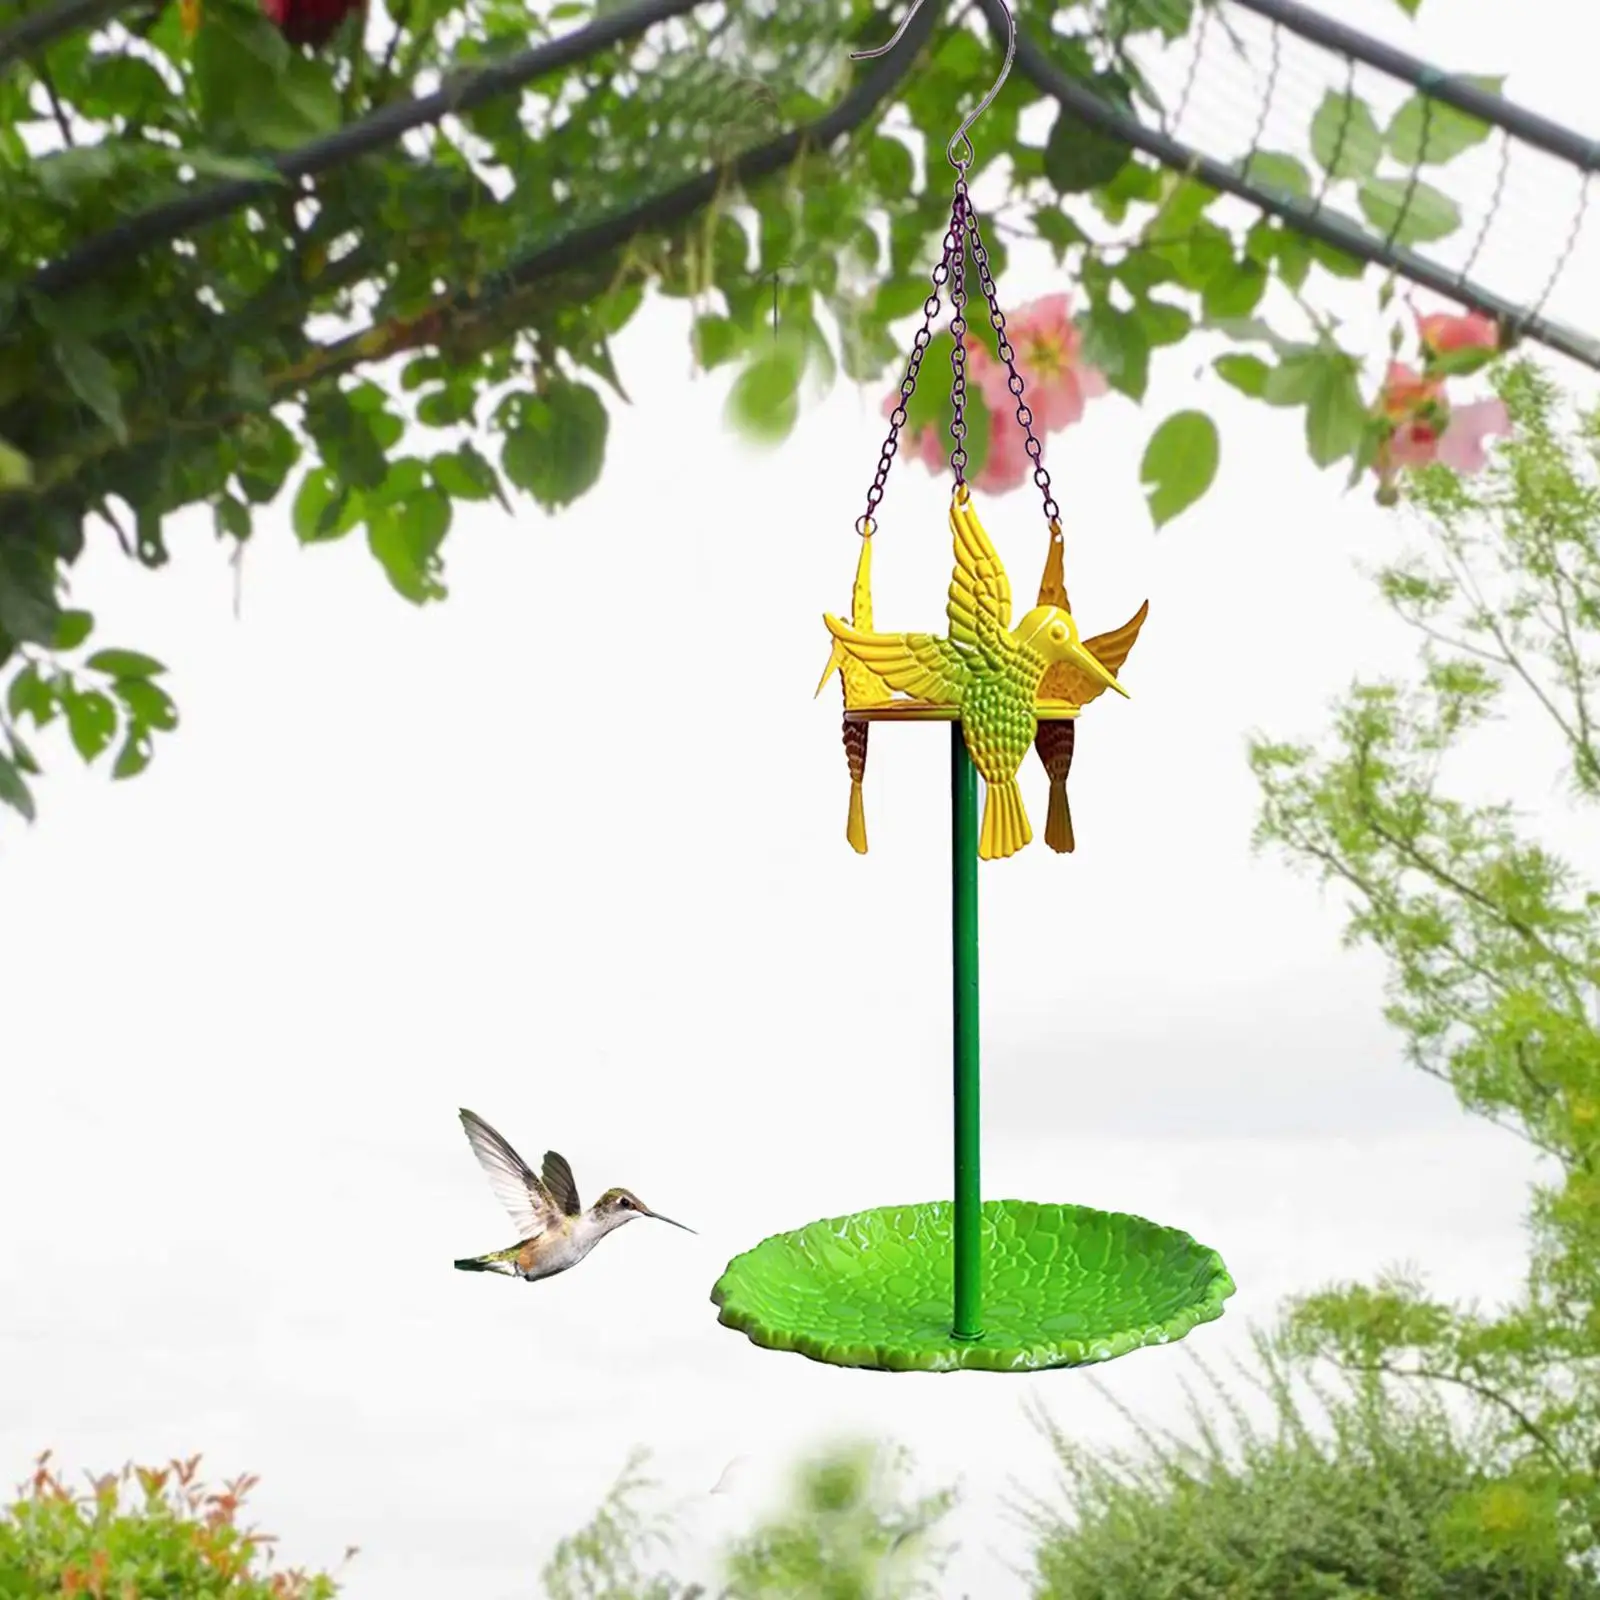 Metal Hanging Bird Feeder Platform with Chains Tray Pet Supplies for Backyard Outdoor Yard Garden Decor